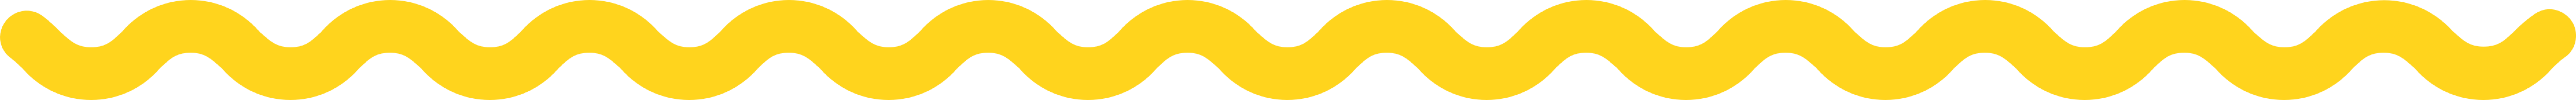 Minderful_Wave_long_yellow-1